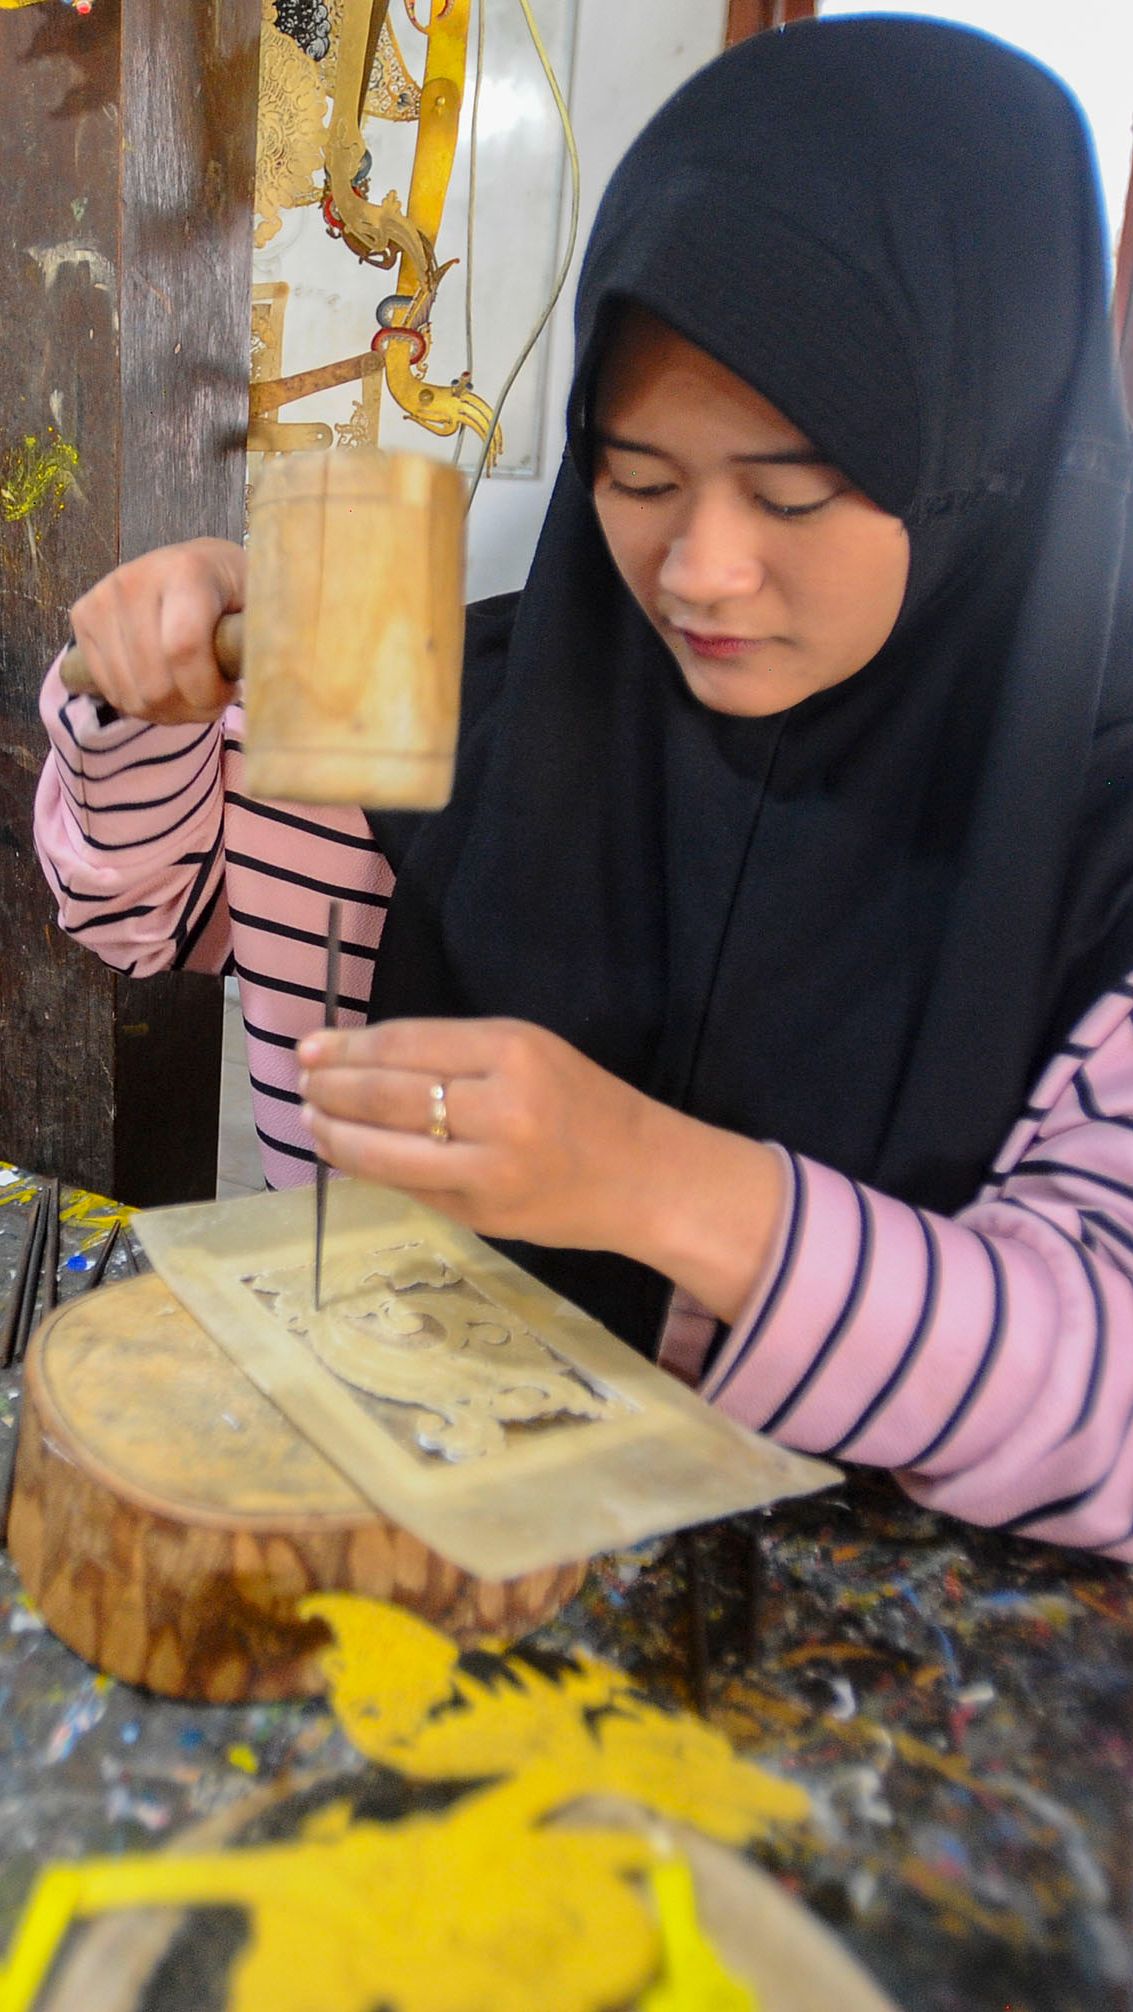 Kegiatan ini juga untuk melestarikan seni budaya wayang kulit khas Indonesia.